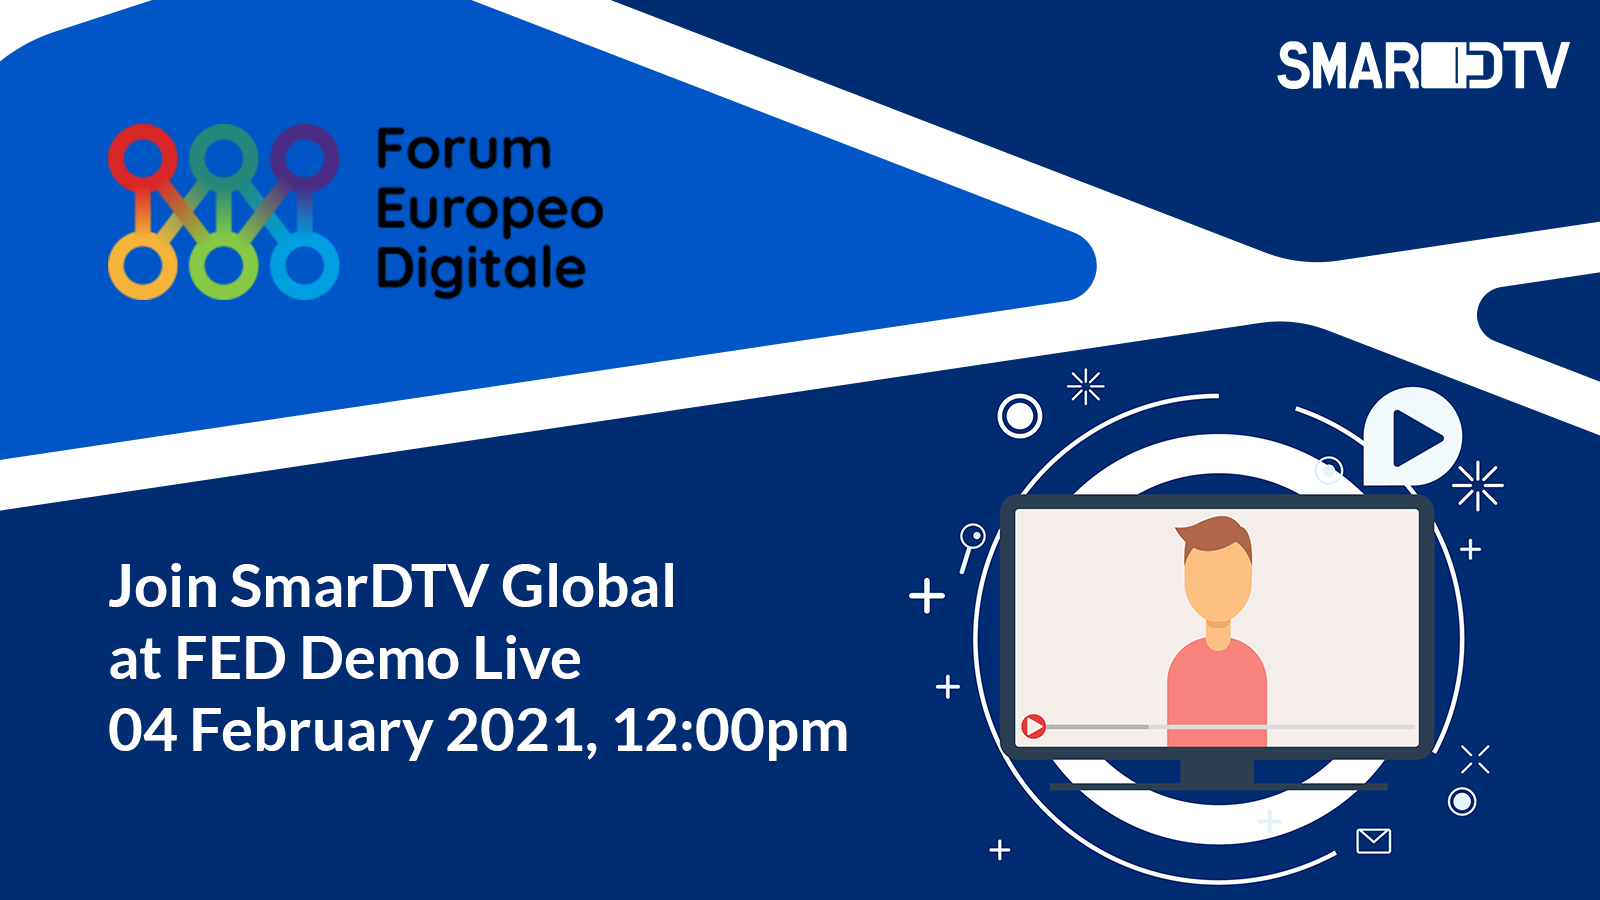 SmarDTV Global FED Demo Live 2021 Virtual Event